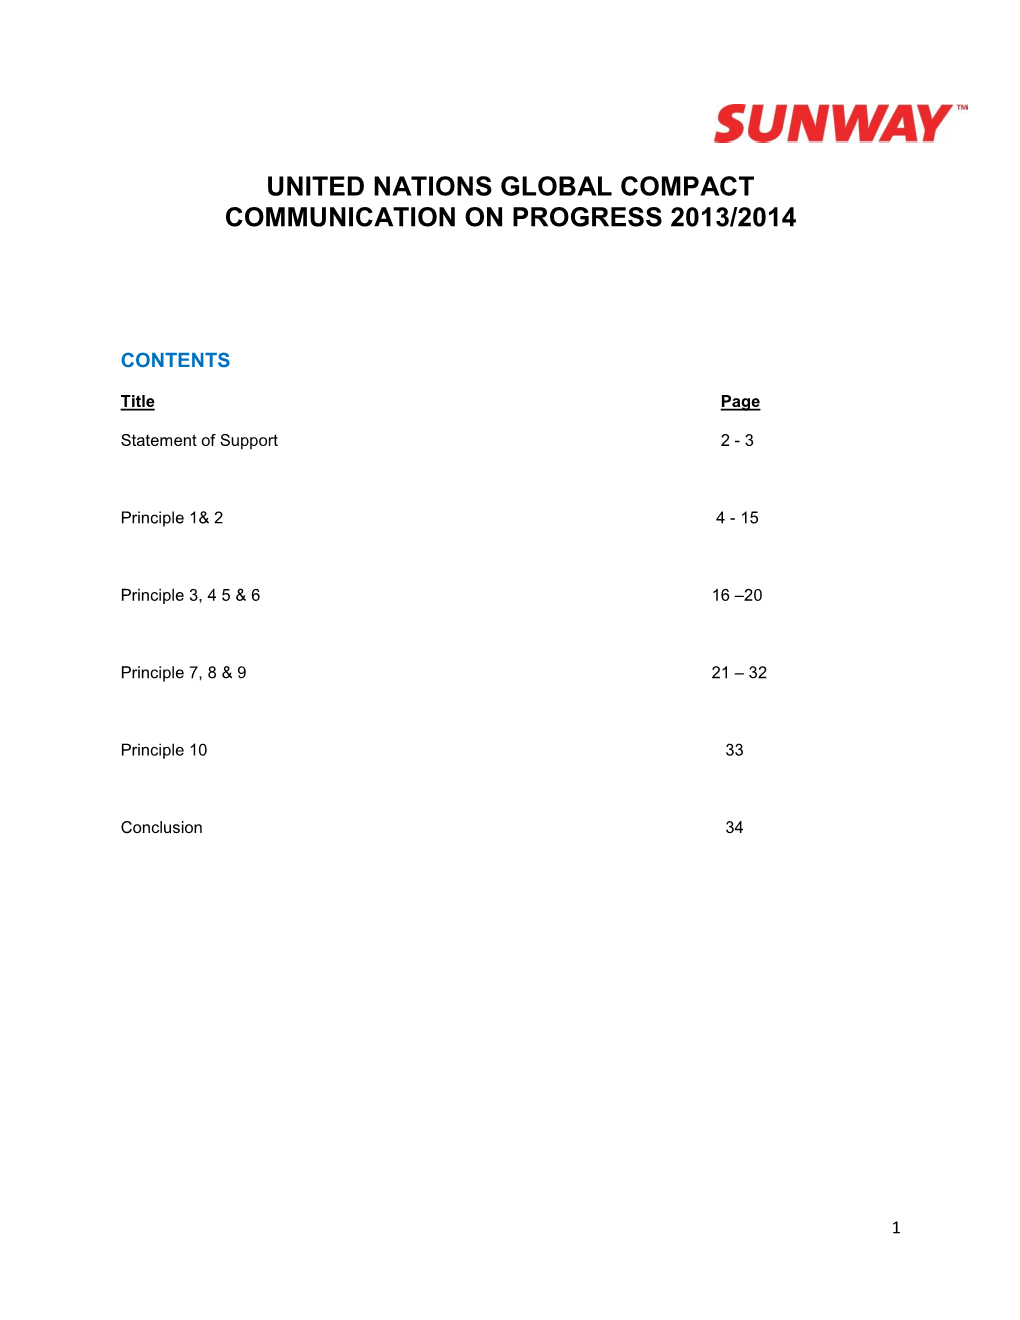 United Nations Global Compact Communication on Progress 2013/2014